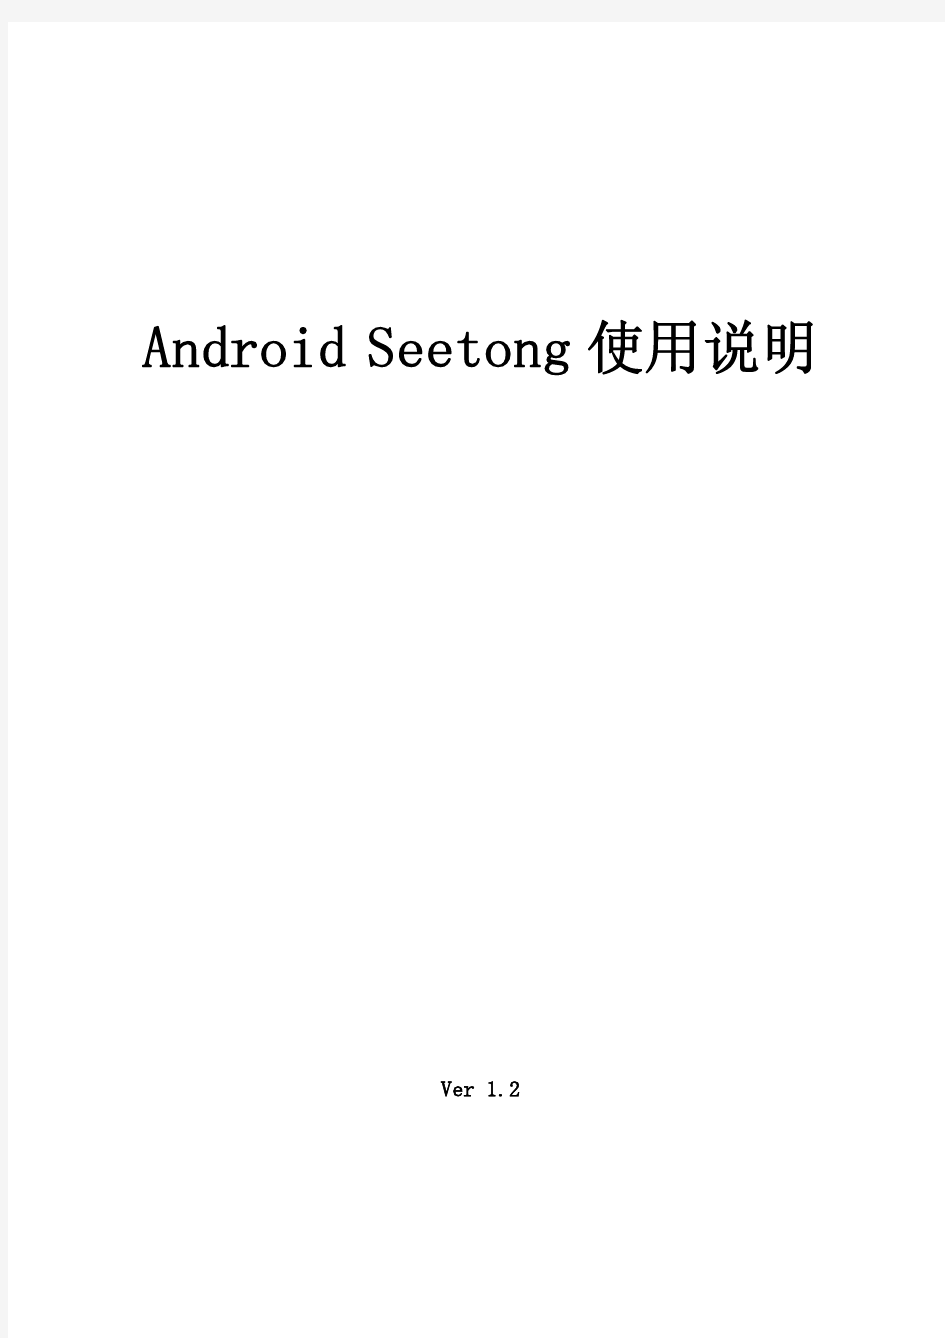 Android Seetong使用手册V1.2